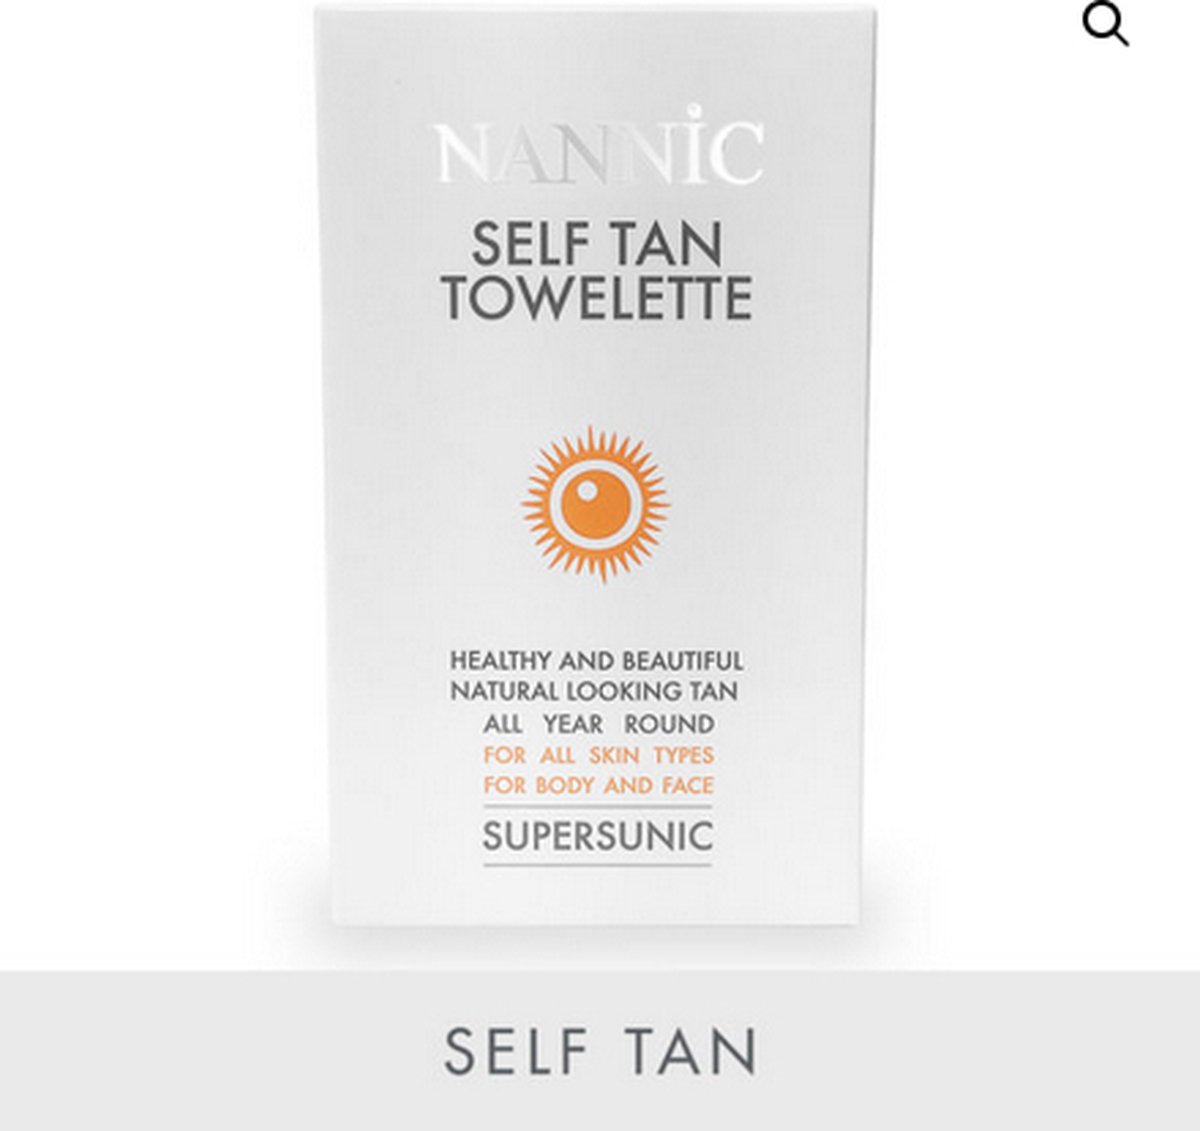 Nannic Self Tan Towelette Supersunic